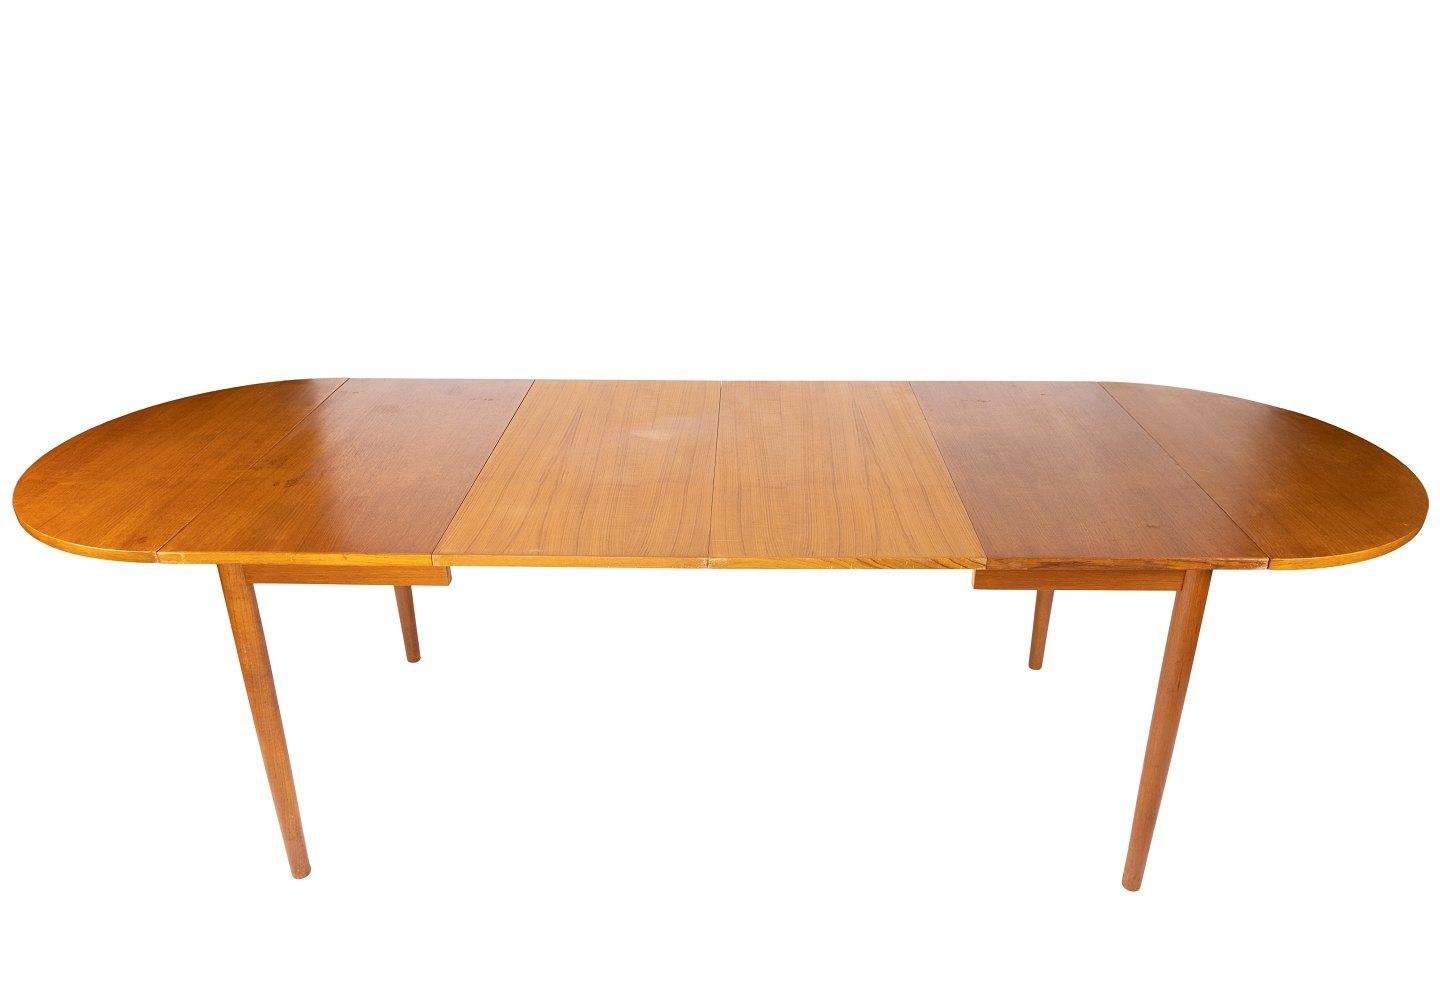 Scandinavian Modern Dining Table in Teak Designed by Arne Vodder from the 1960s For Sale